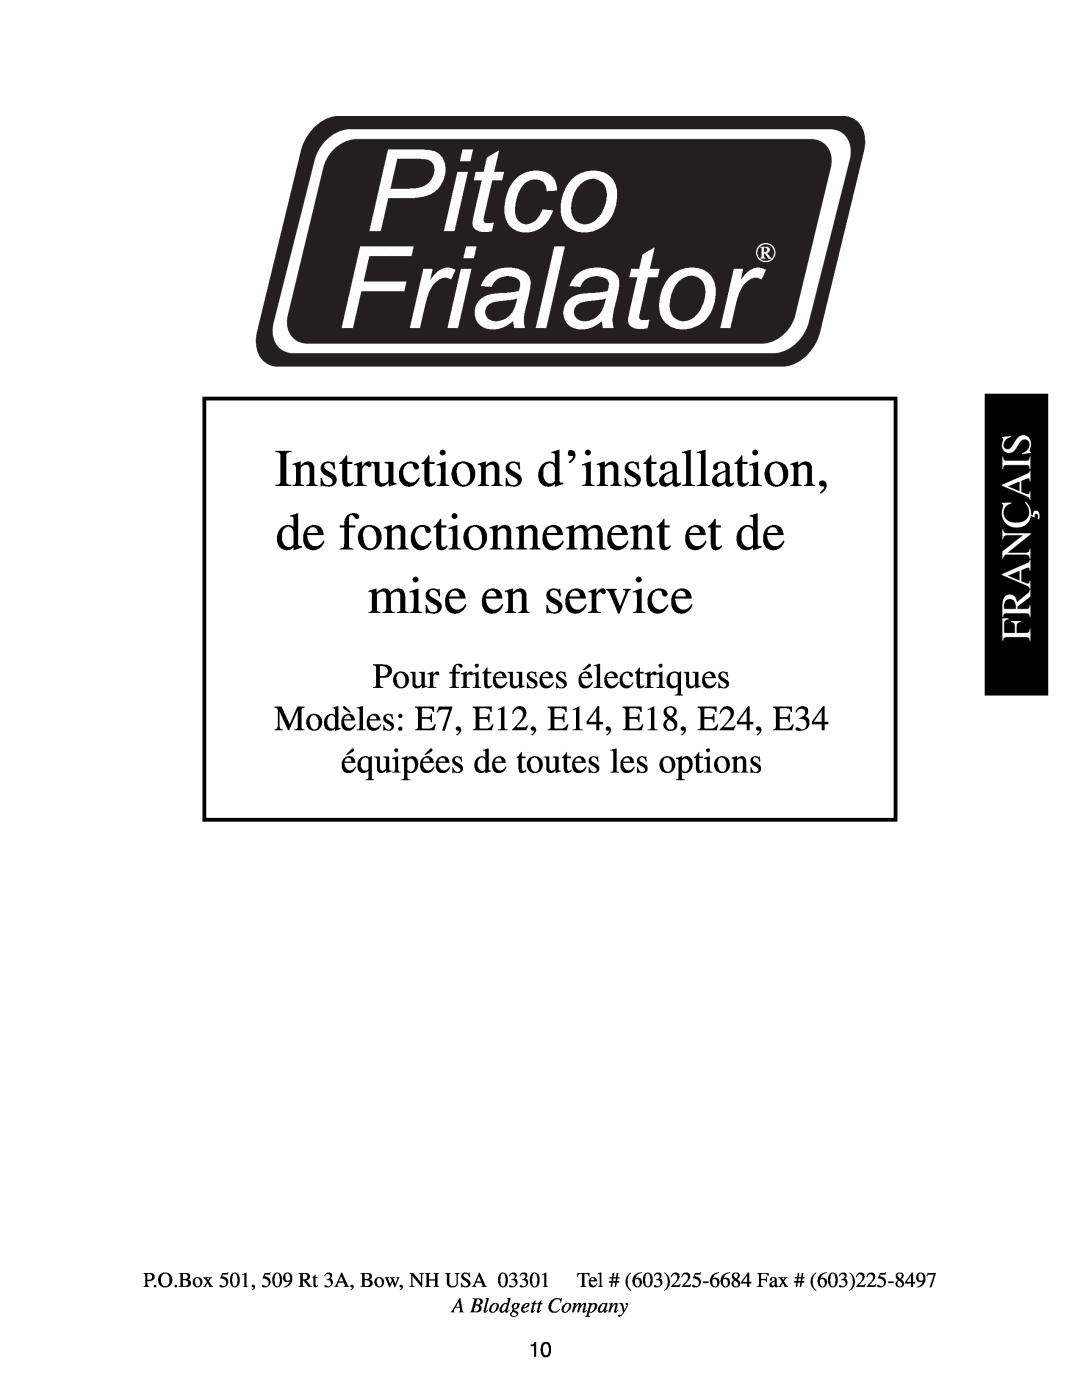 Pitco Frialator manual Français, Pour friteuses électriques, Modèles E7, E12, E14, E18, E24, E34, A Blodgett Company 